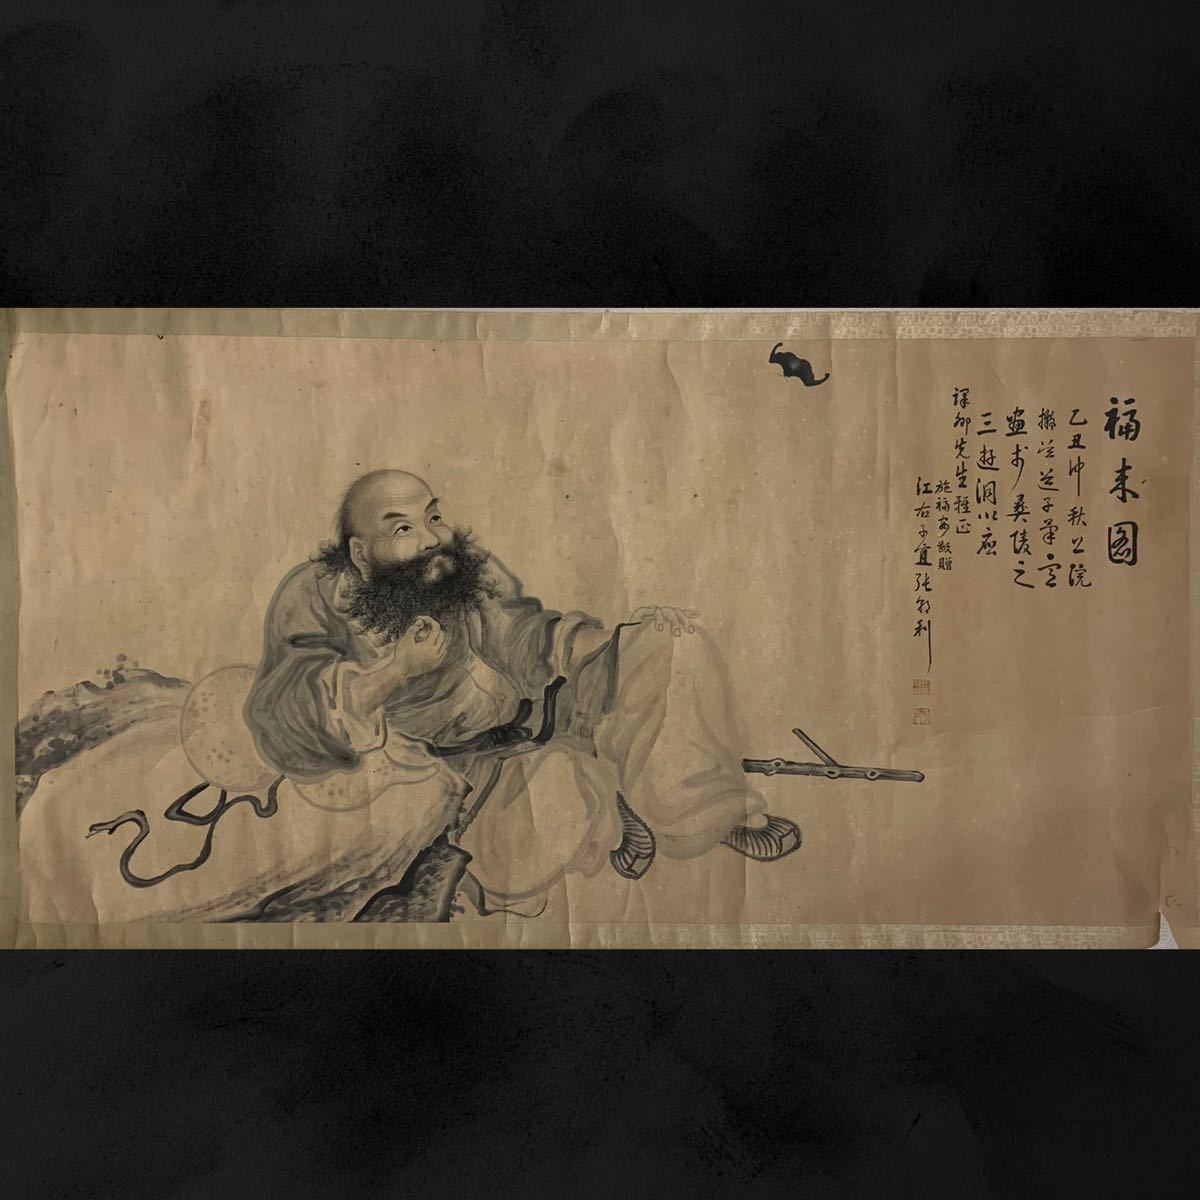 [प्रतिलिपि] (72) हस्ताक्षरित ज़ियी रोल्ड अप चीनी कला काल पेंटिंग का आकार लगभग। 67 x 134 सेमी, कलाकृति, चित्रकारी, अन्य